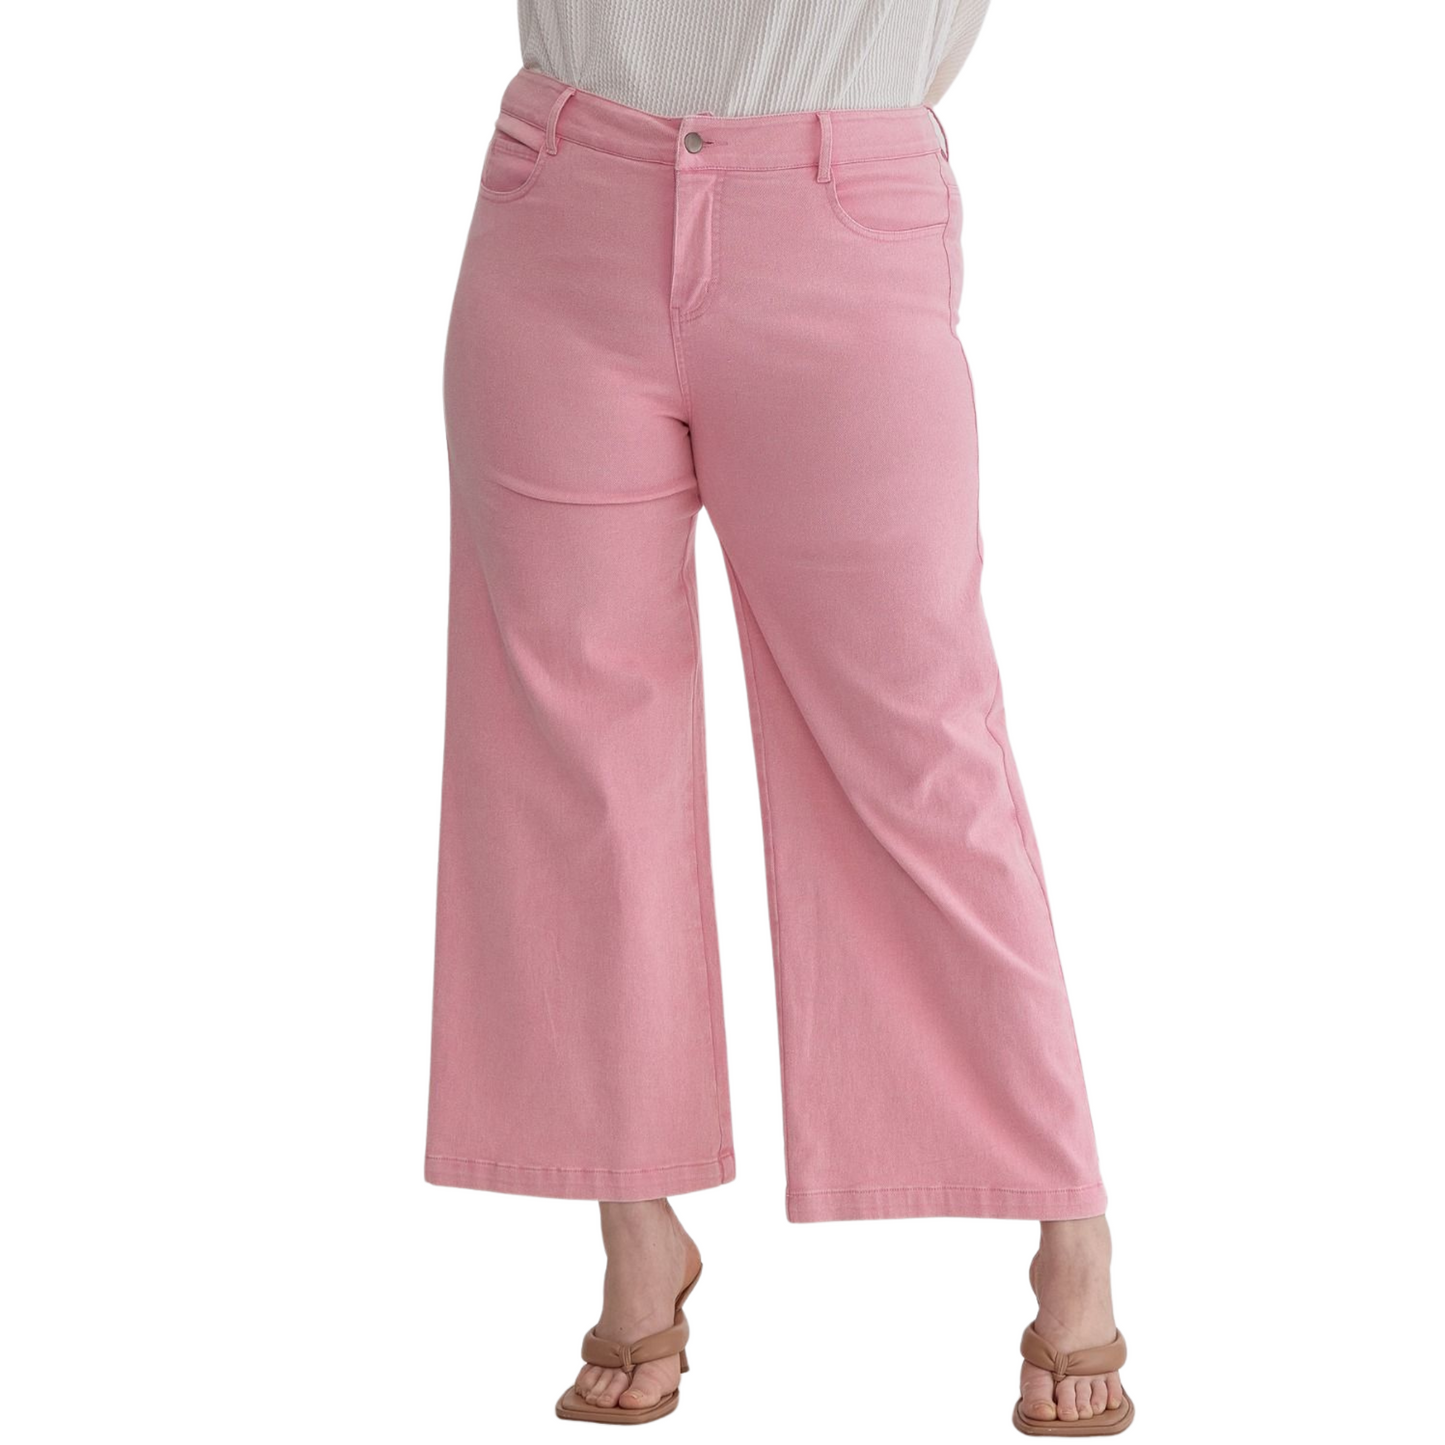 Wide leg plus size denim pants in pink